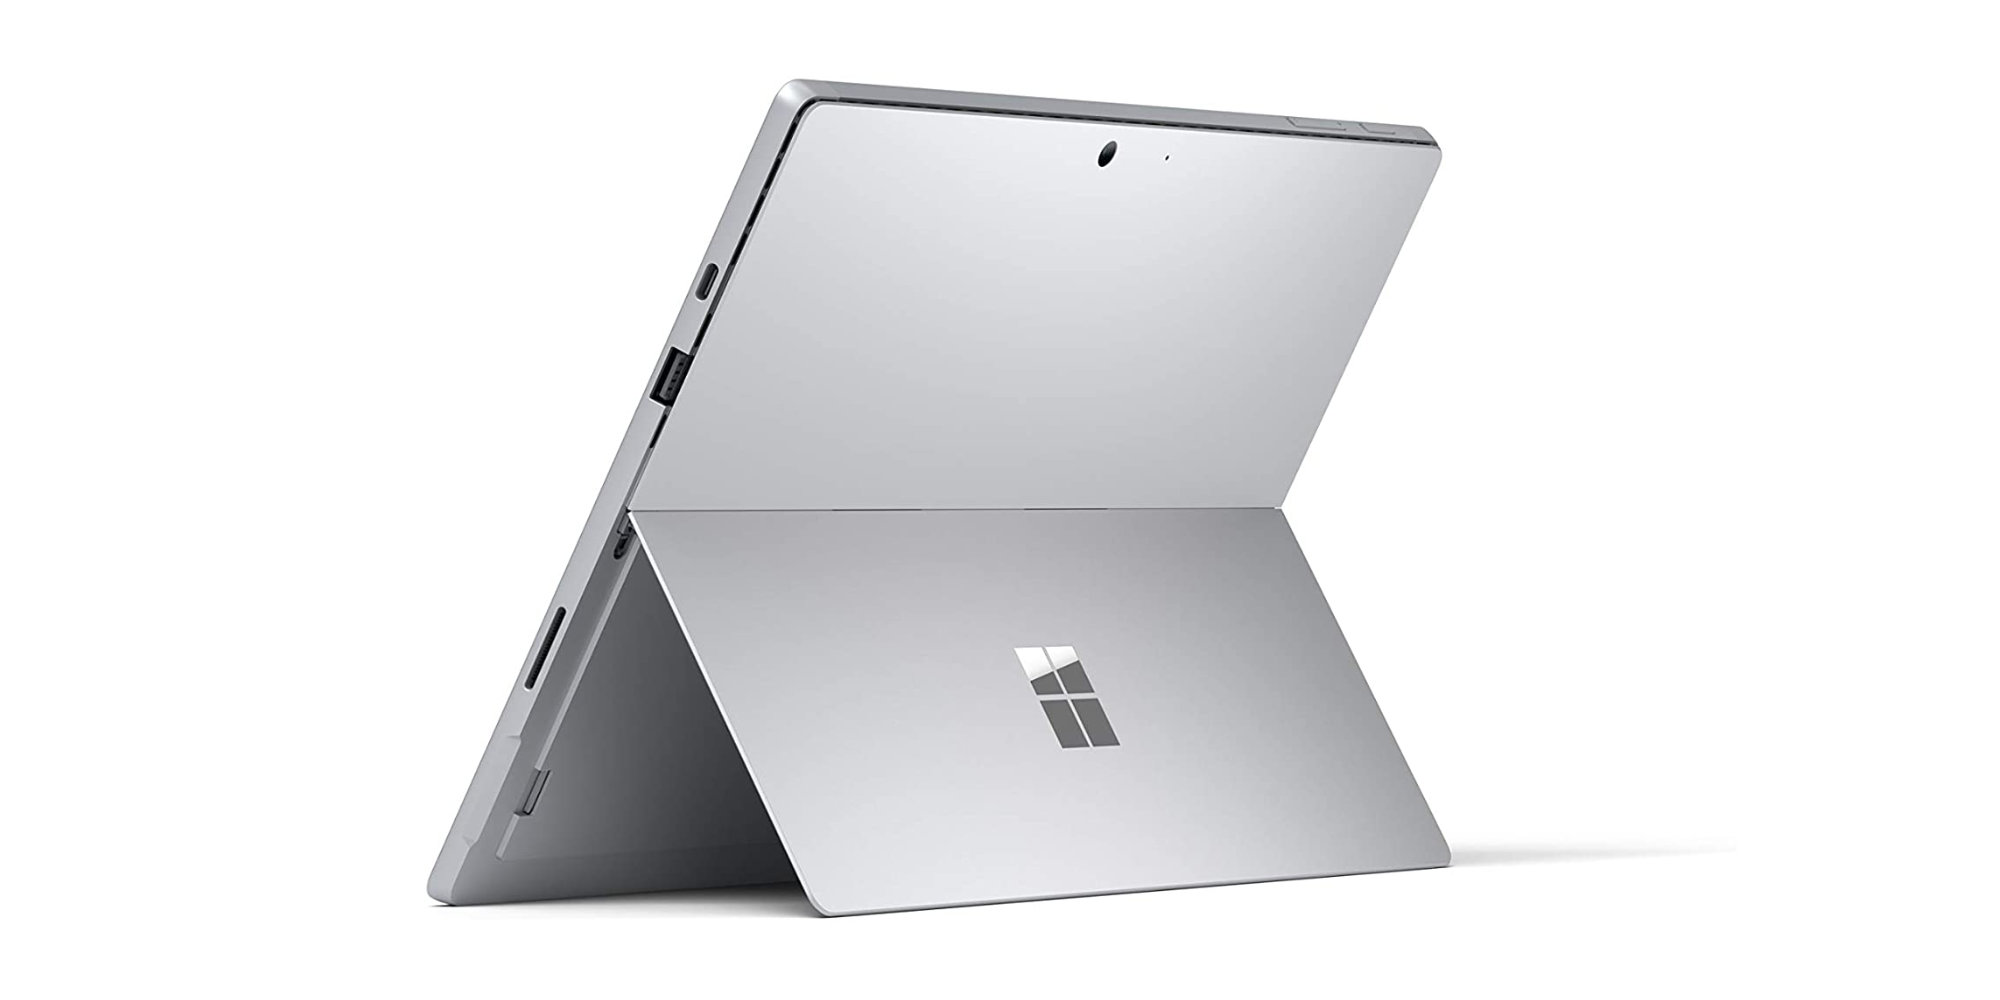 Microsoft surface laptop i5/8GB/256GB